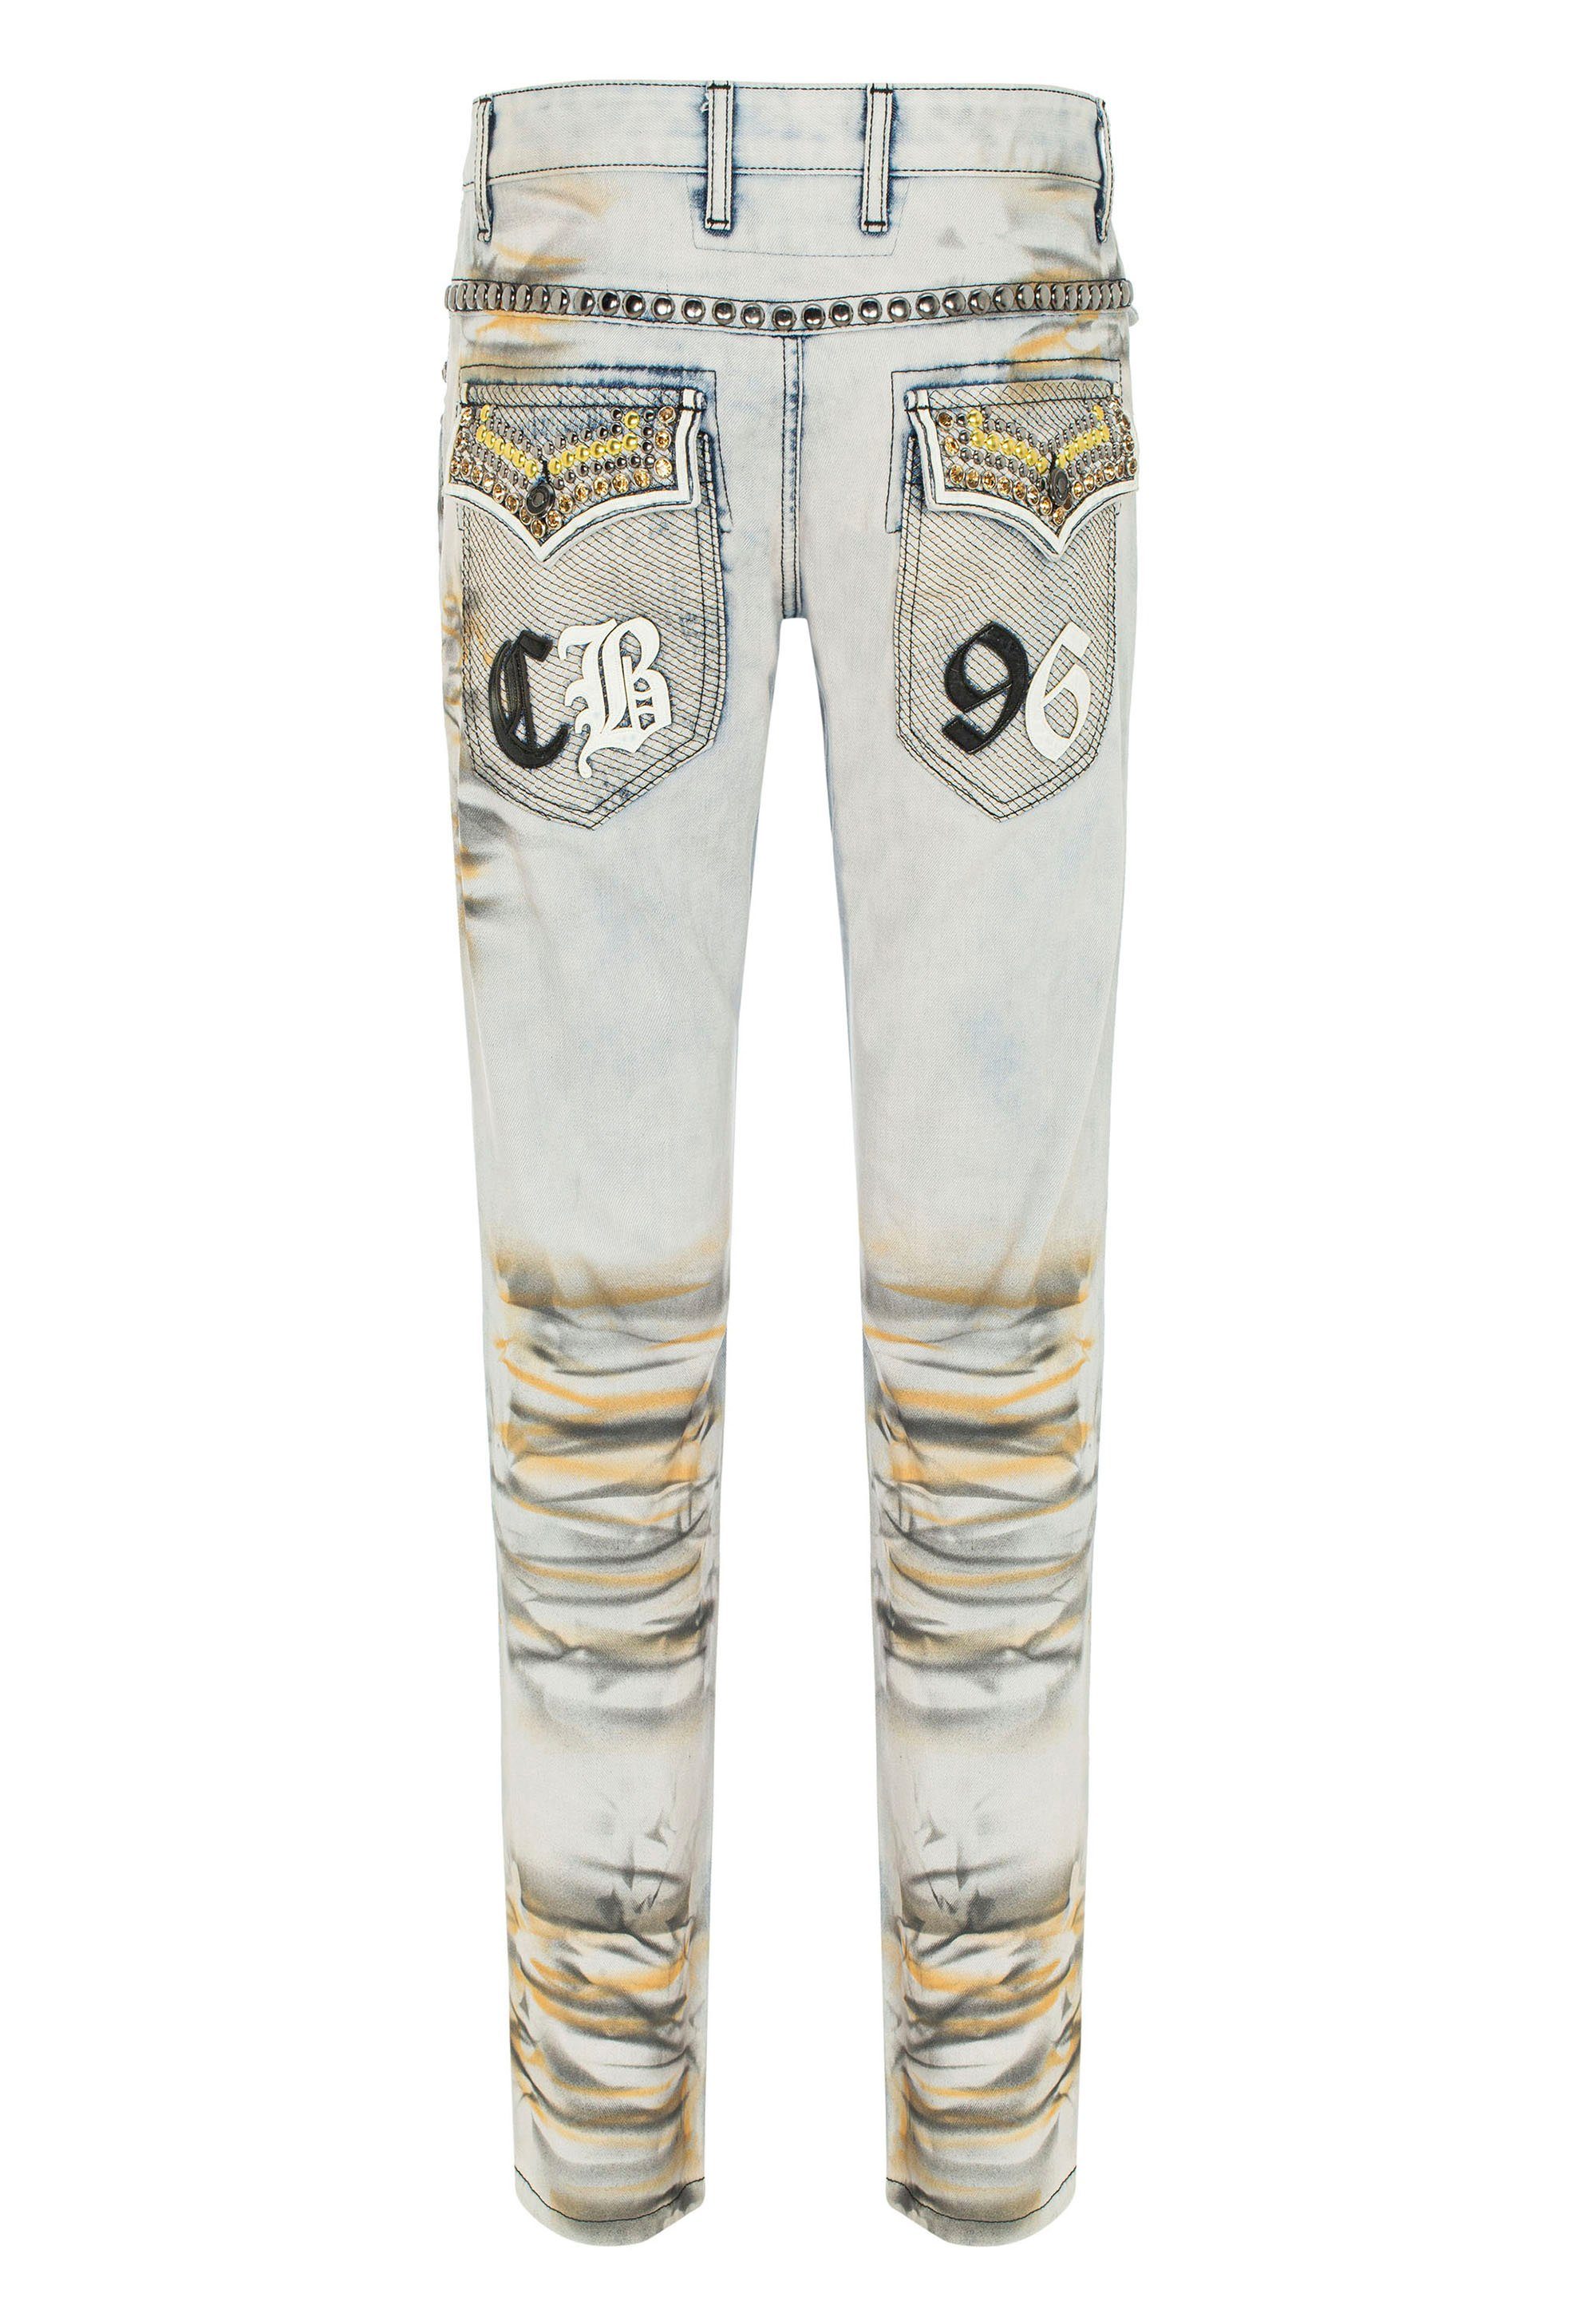 Jeans in Look Baxx extravagantem Bequeme & Cipo